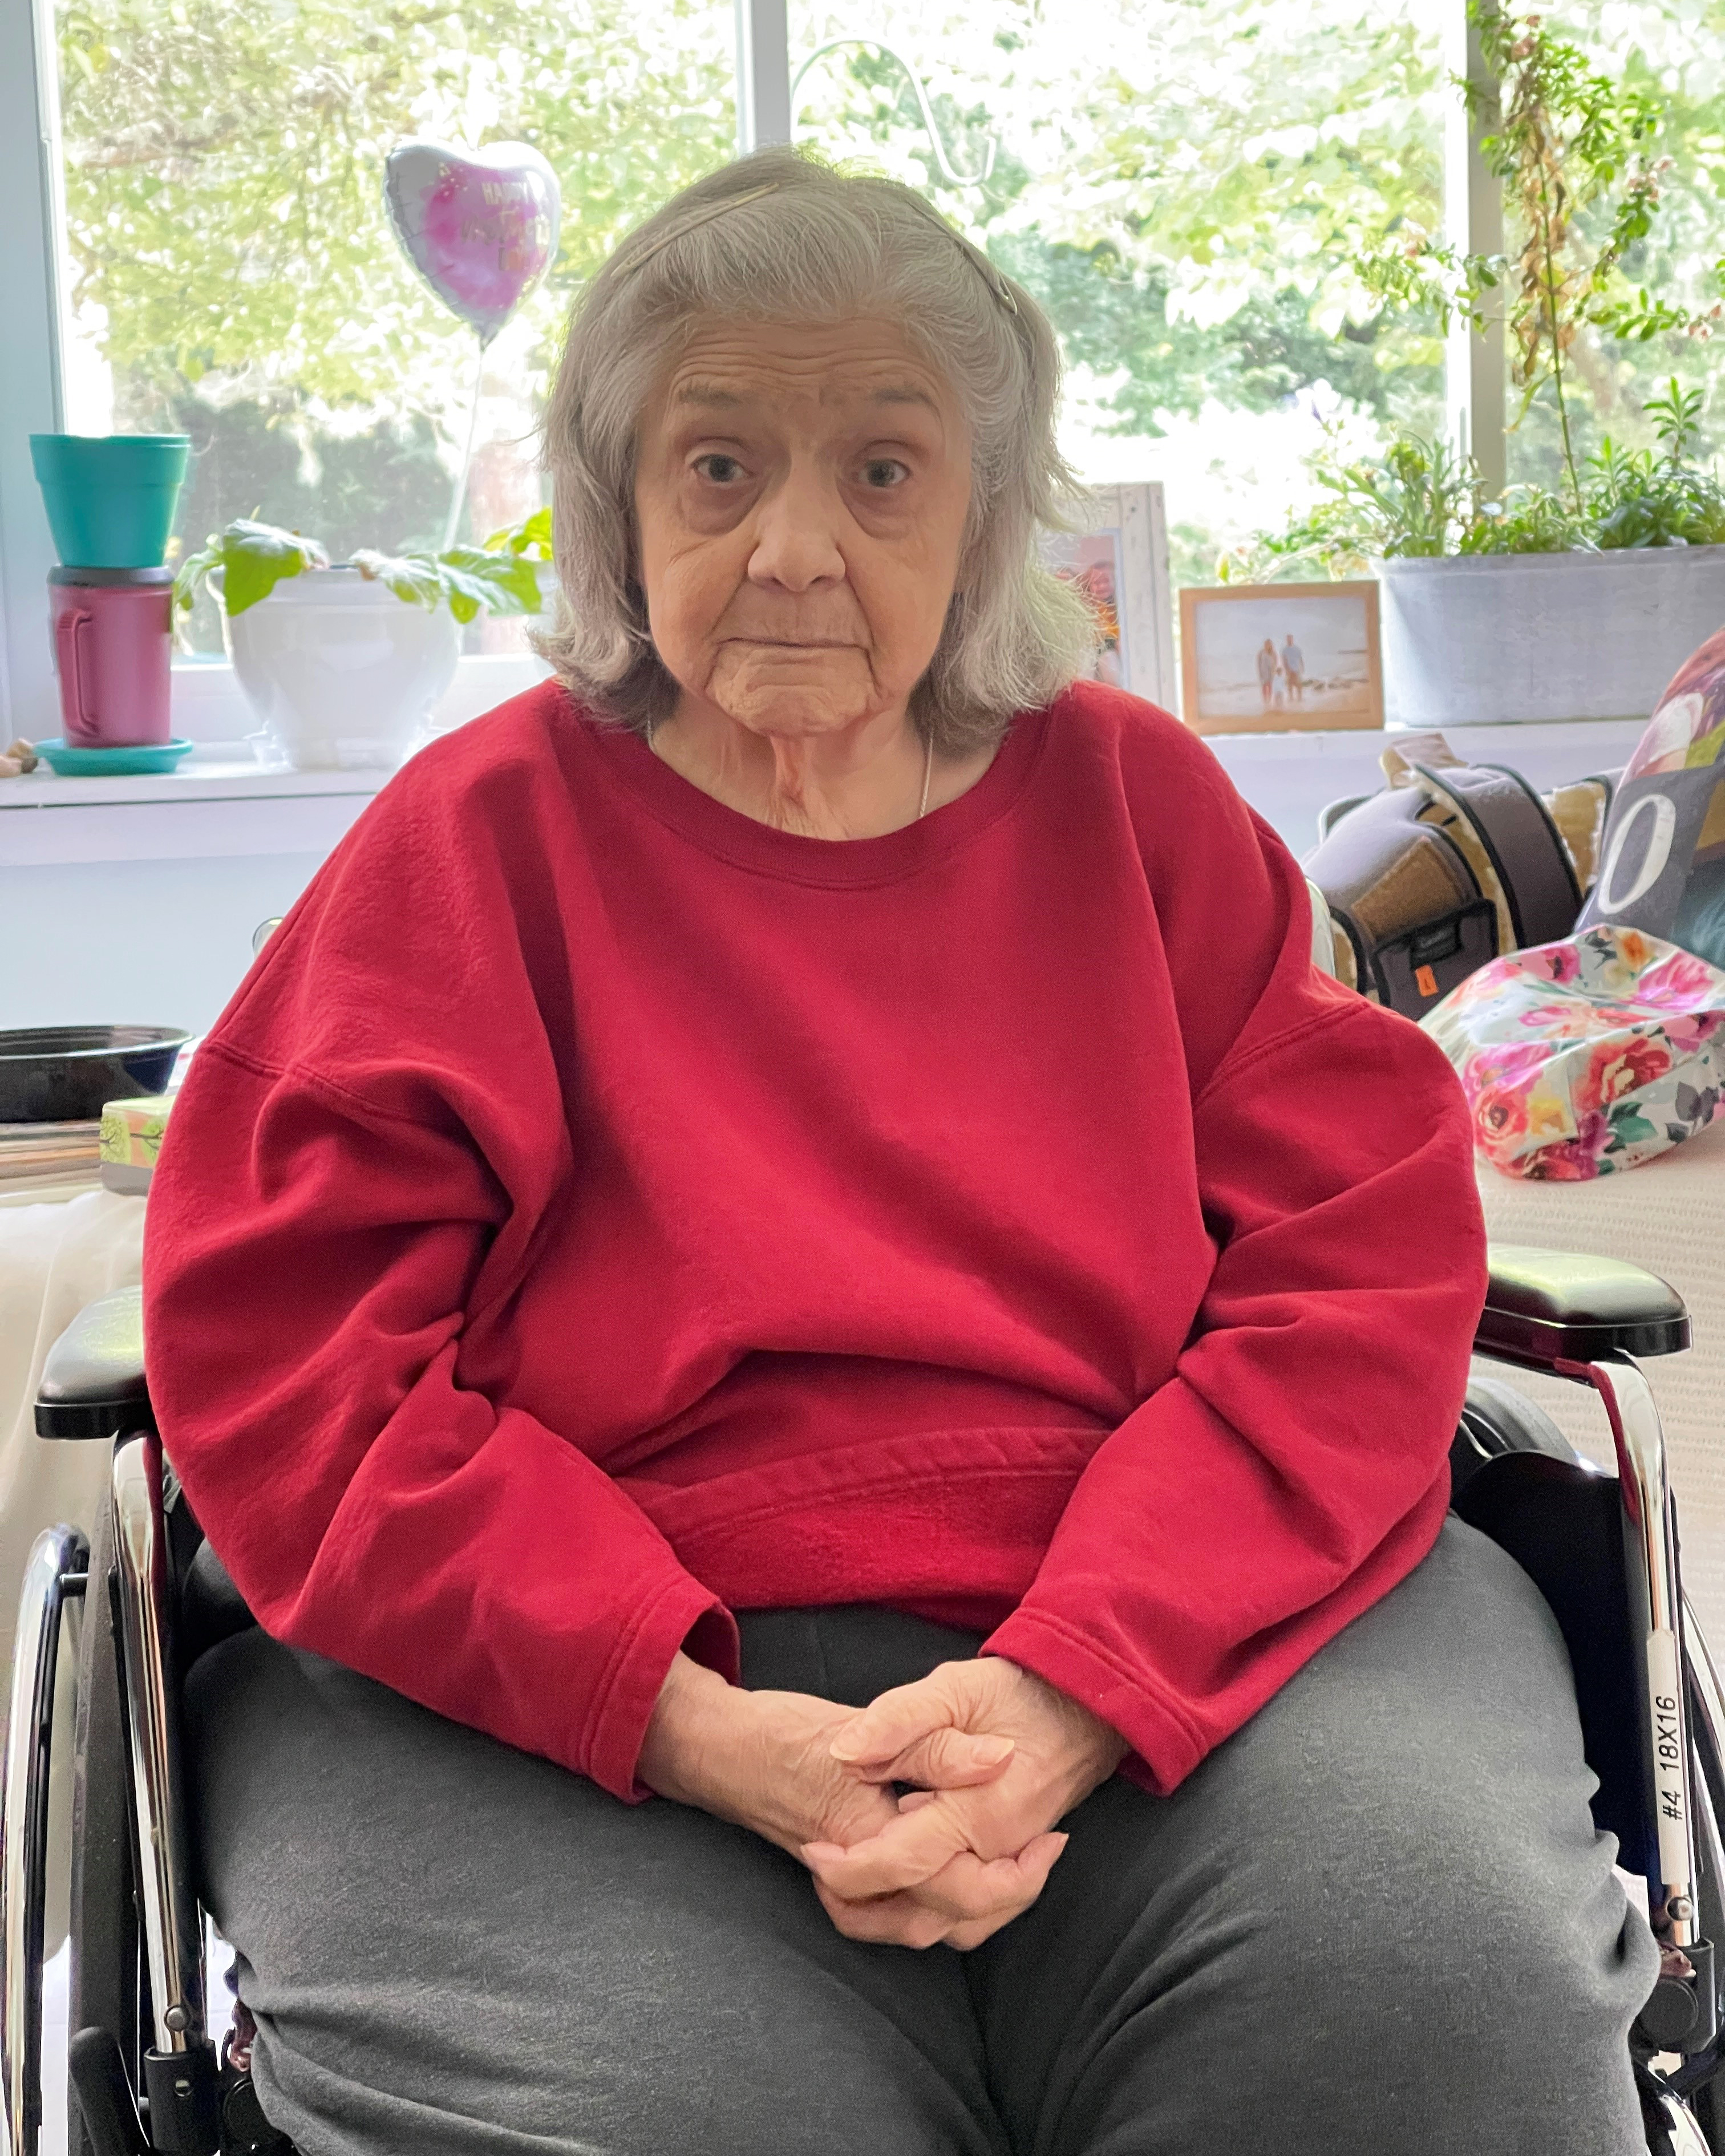 A photo shows Patricia Maynard sitting in a wheelchair.